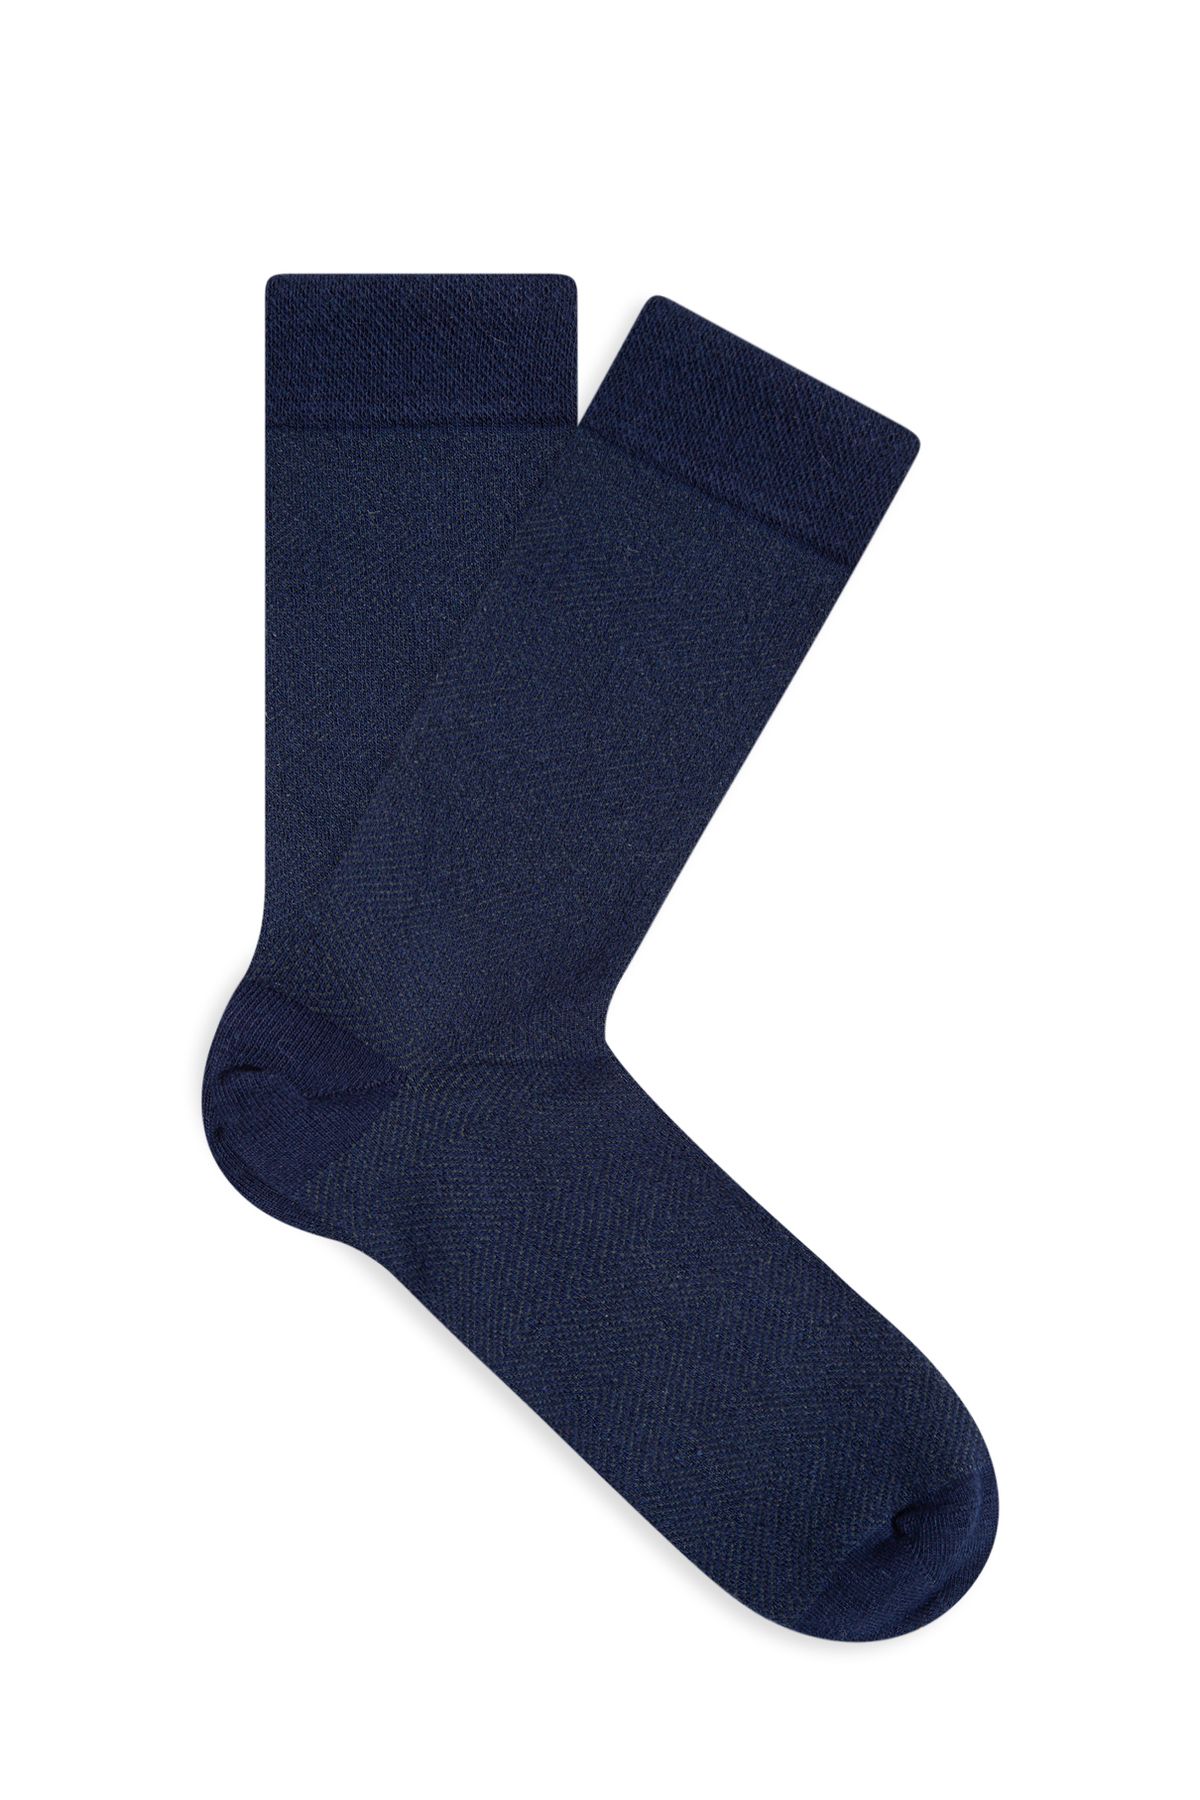 Mavi Lacivert Soket Çorap 0910490-30717